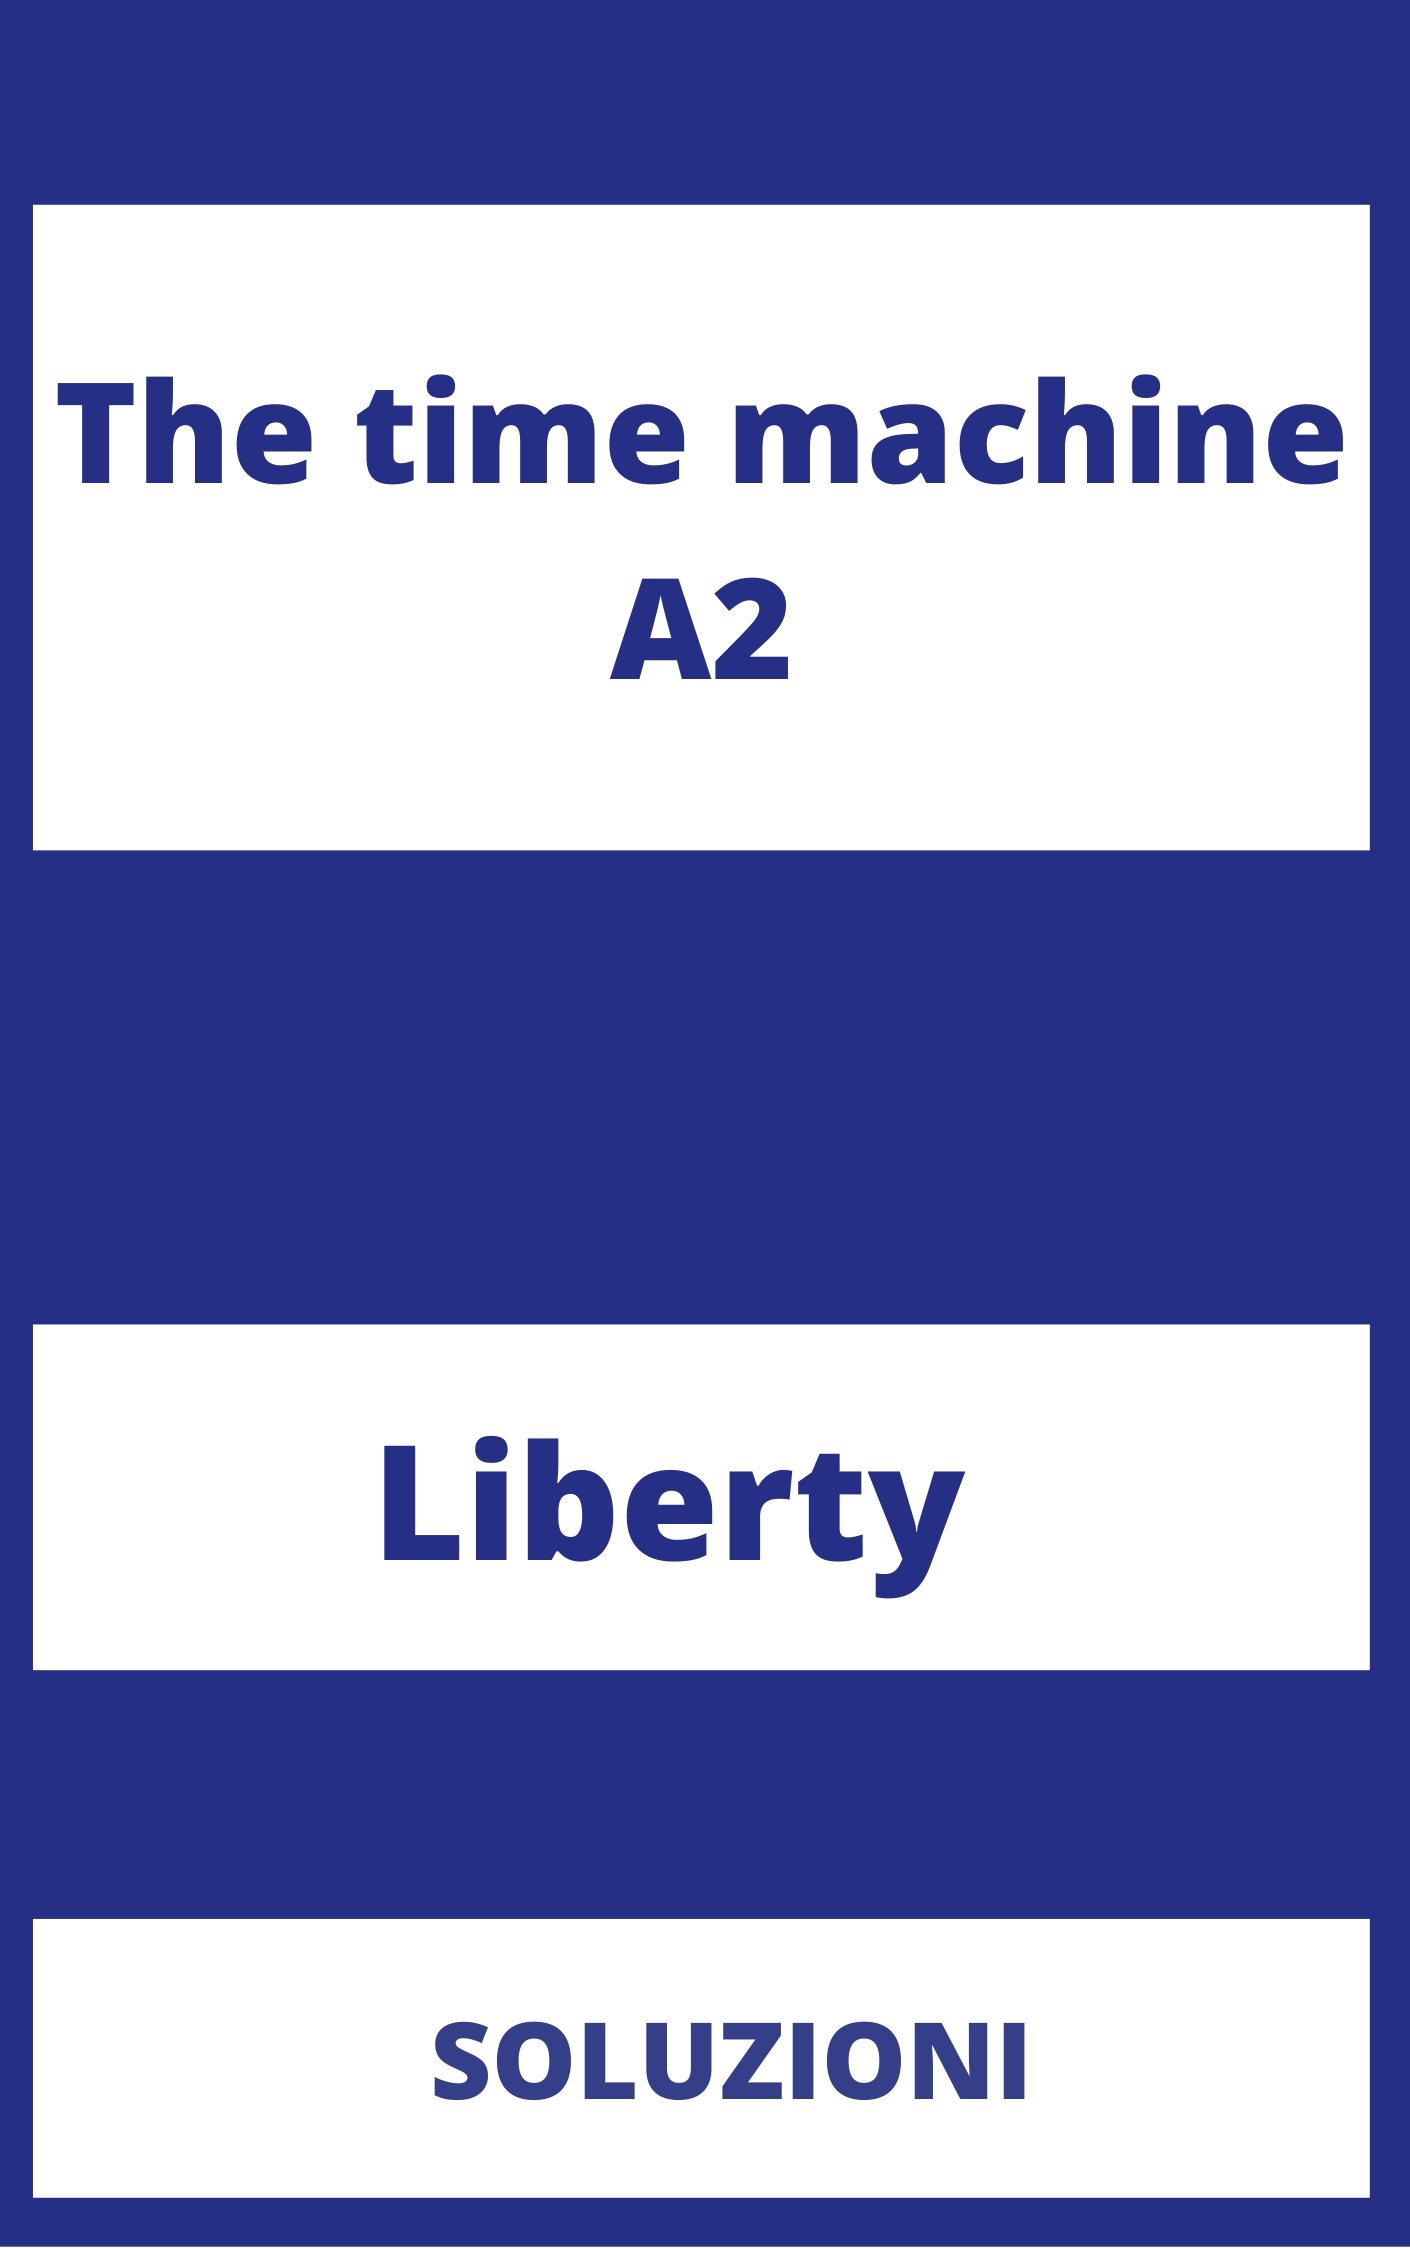 The time machine A2